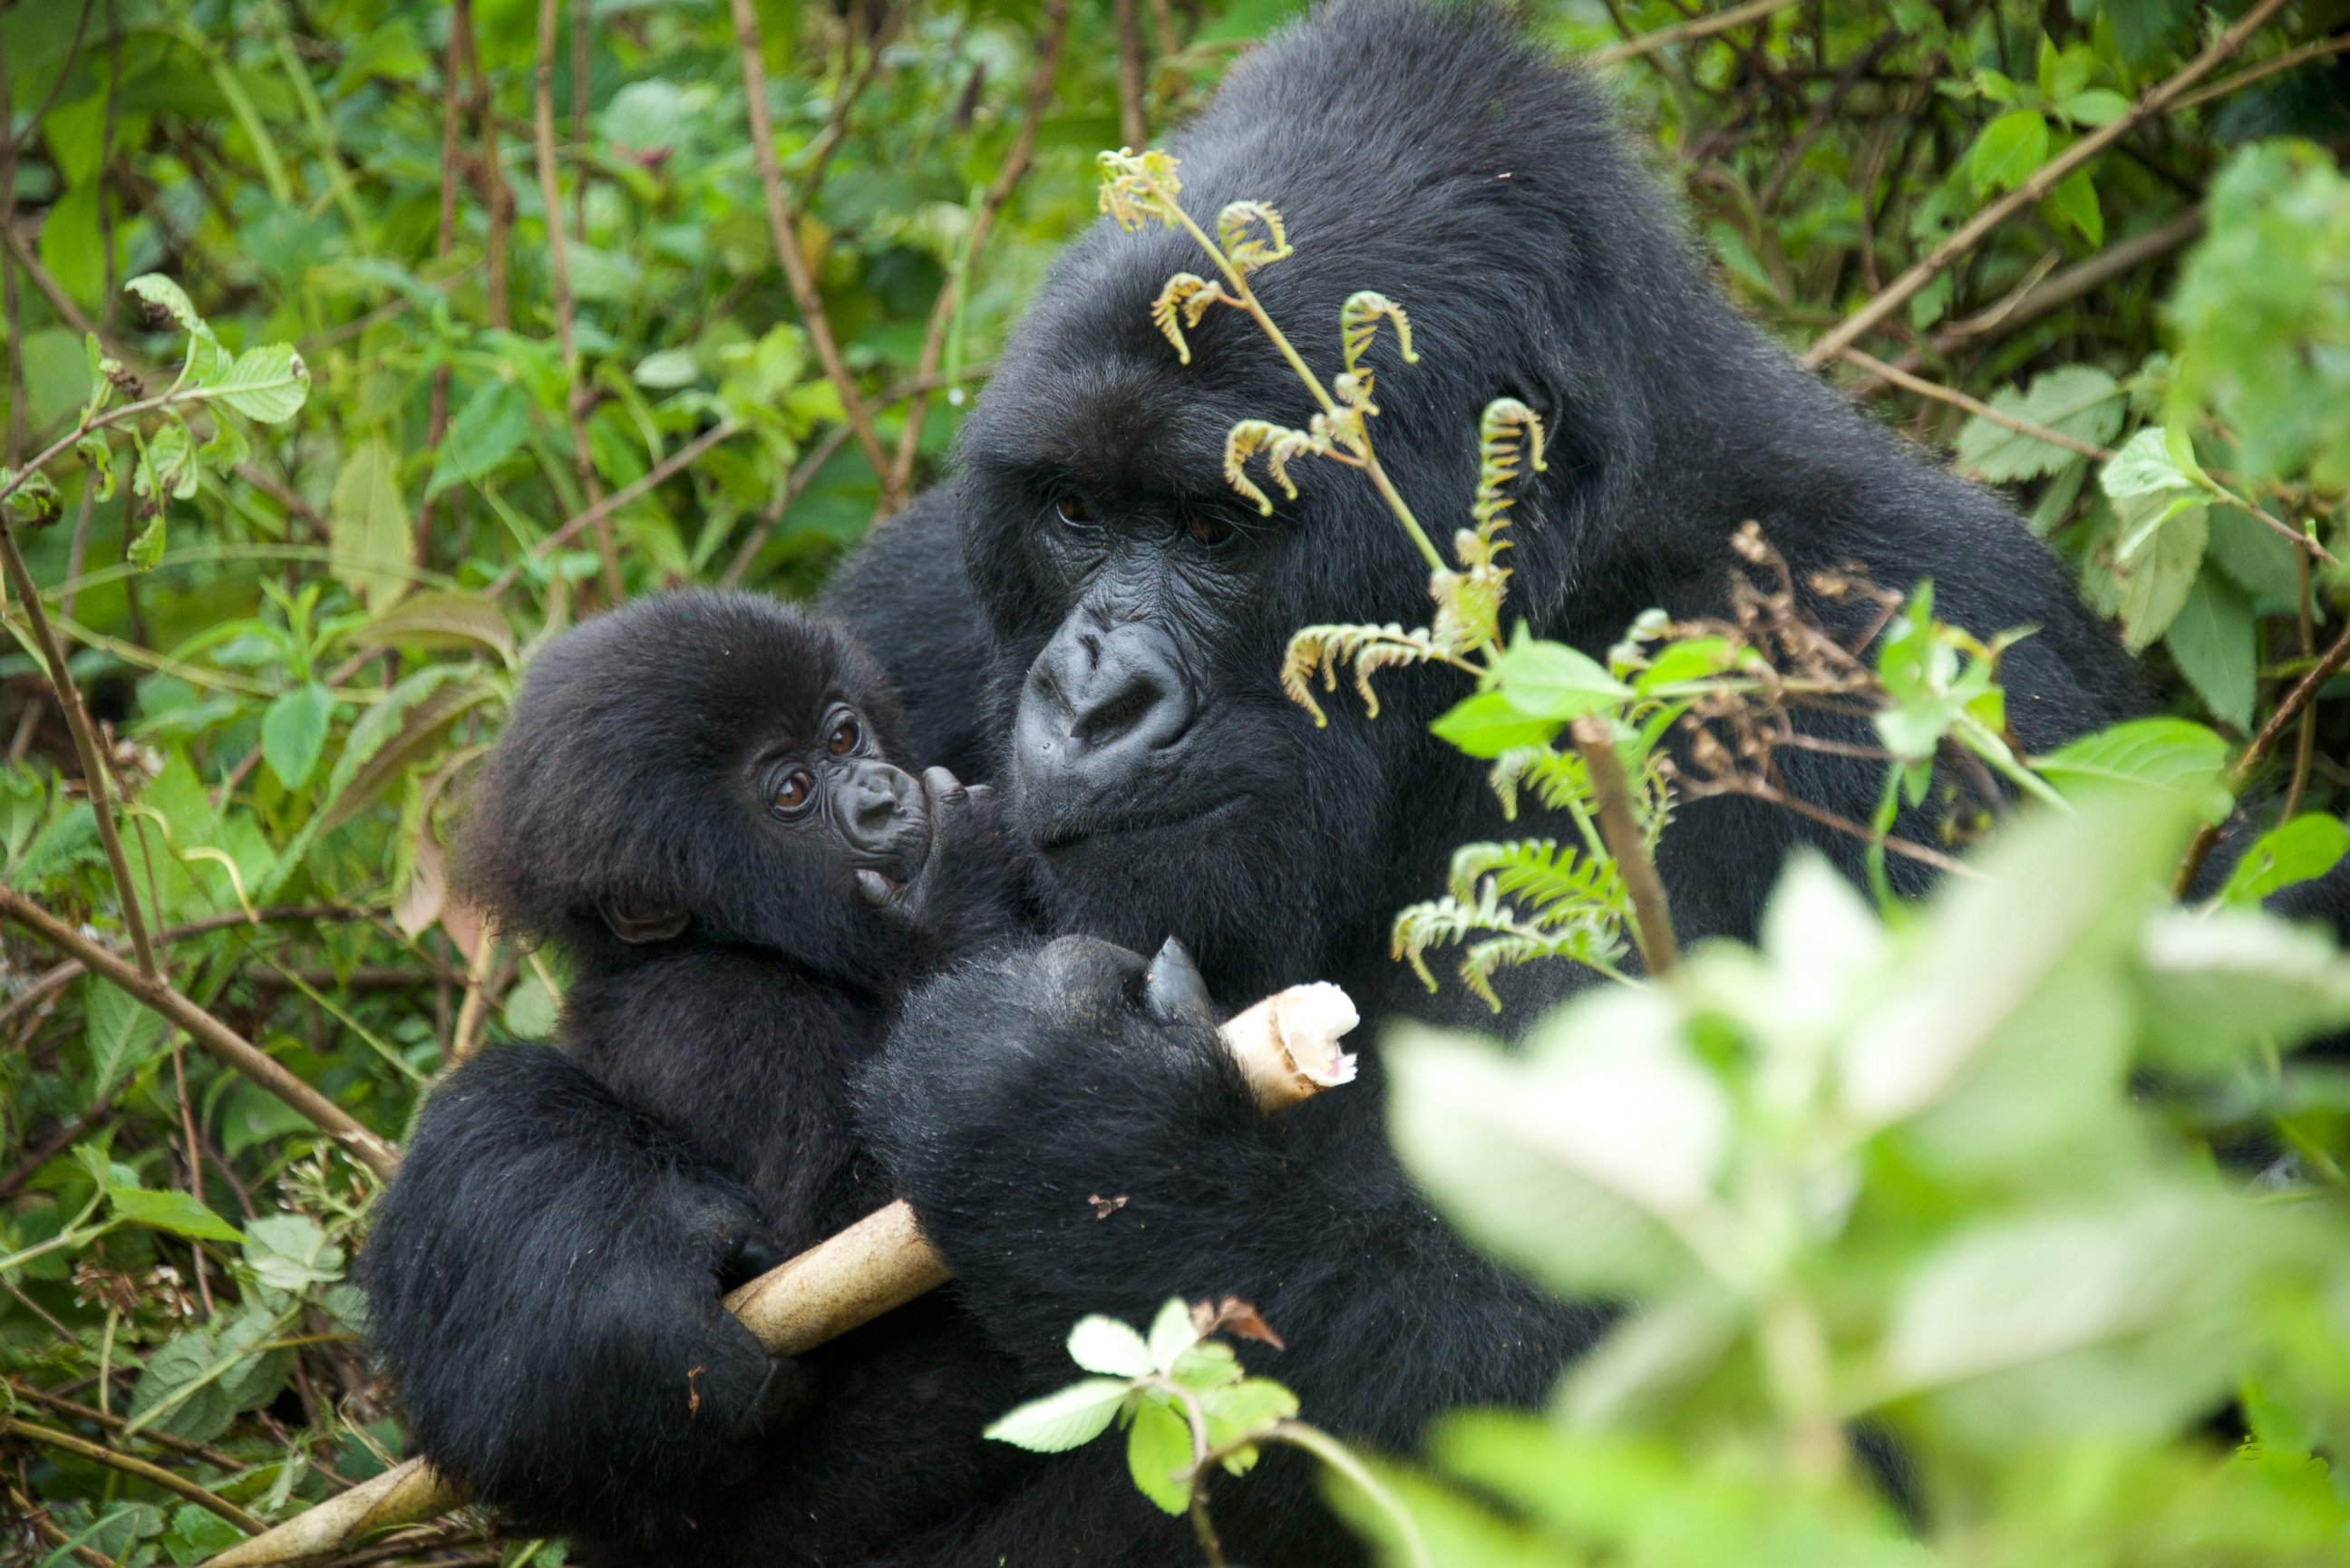 PHOTO: Ikirezi's baby gorilla is pictured. Rwanda named 24 new baby gorillas during the 11th Annual Gorilla Naming Ceremony, Kwita Izina, at the foothills of the Virunga Mountains.